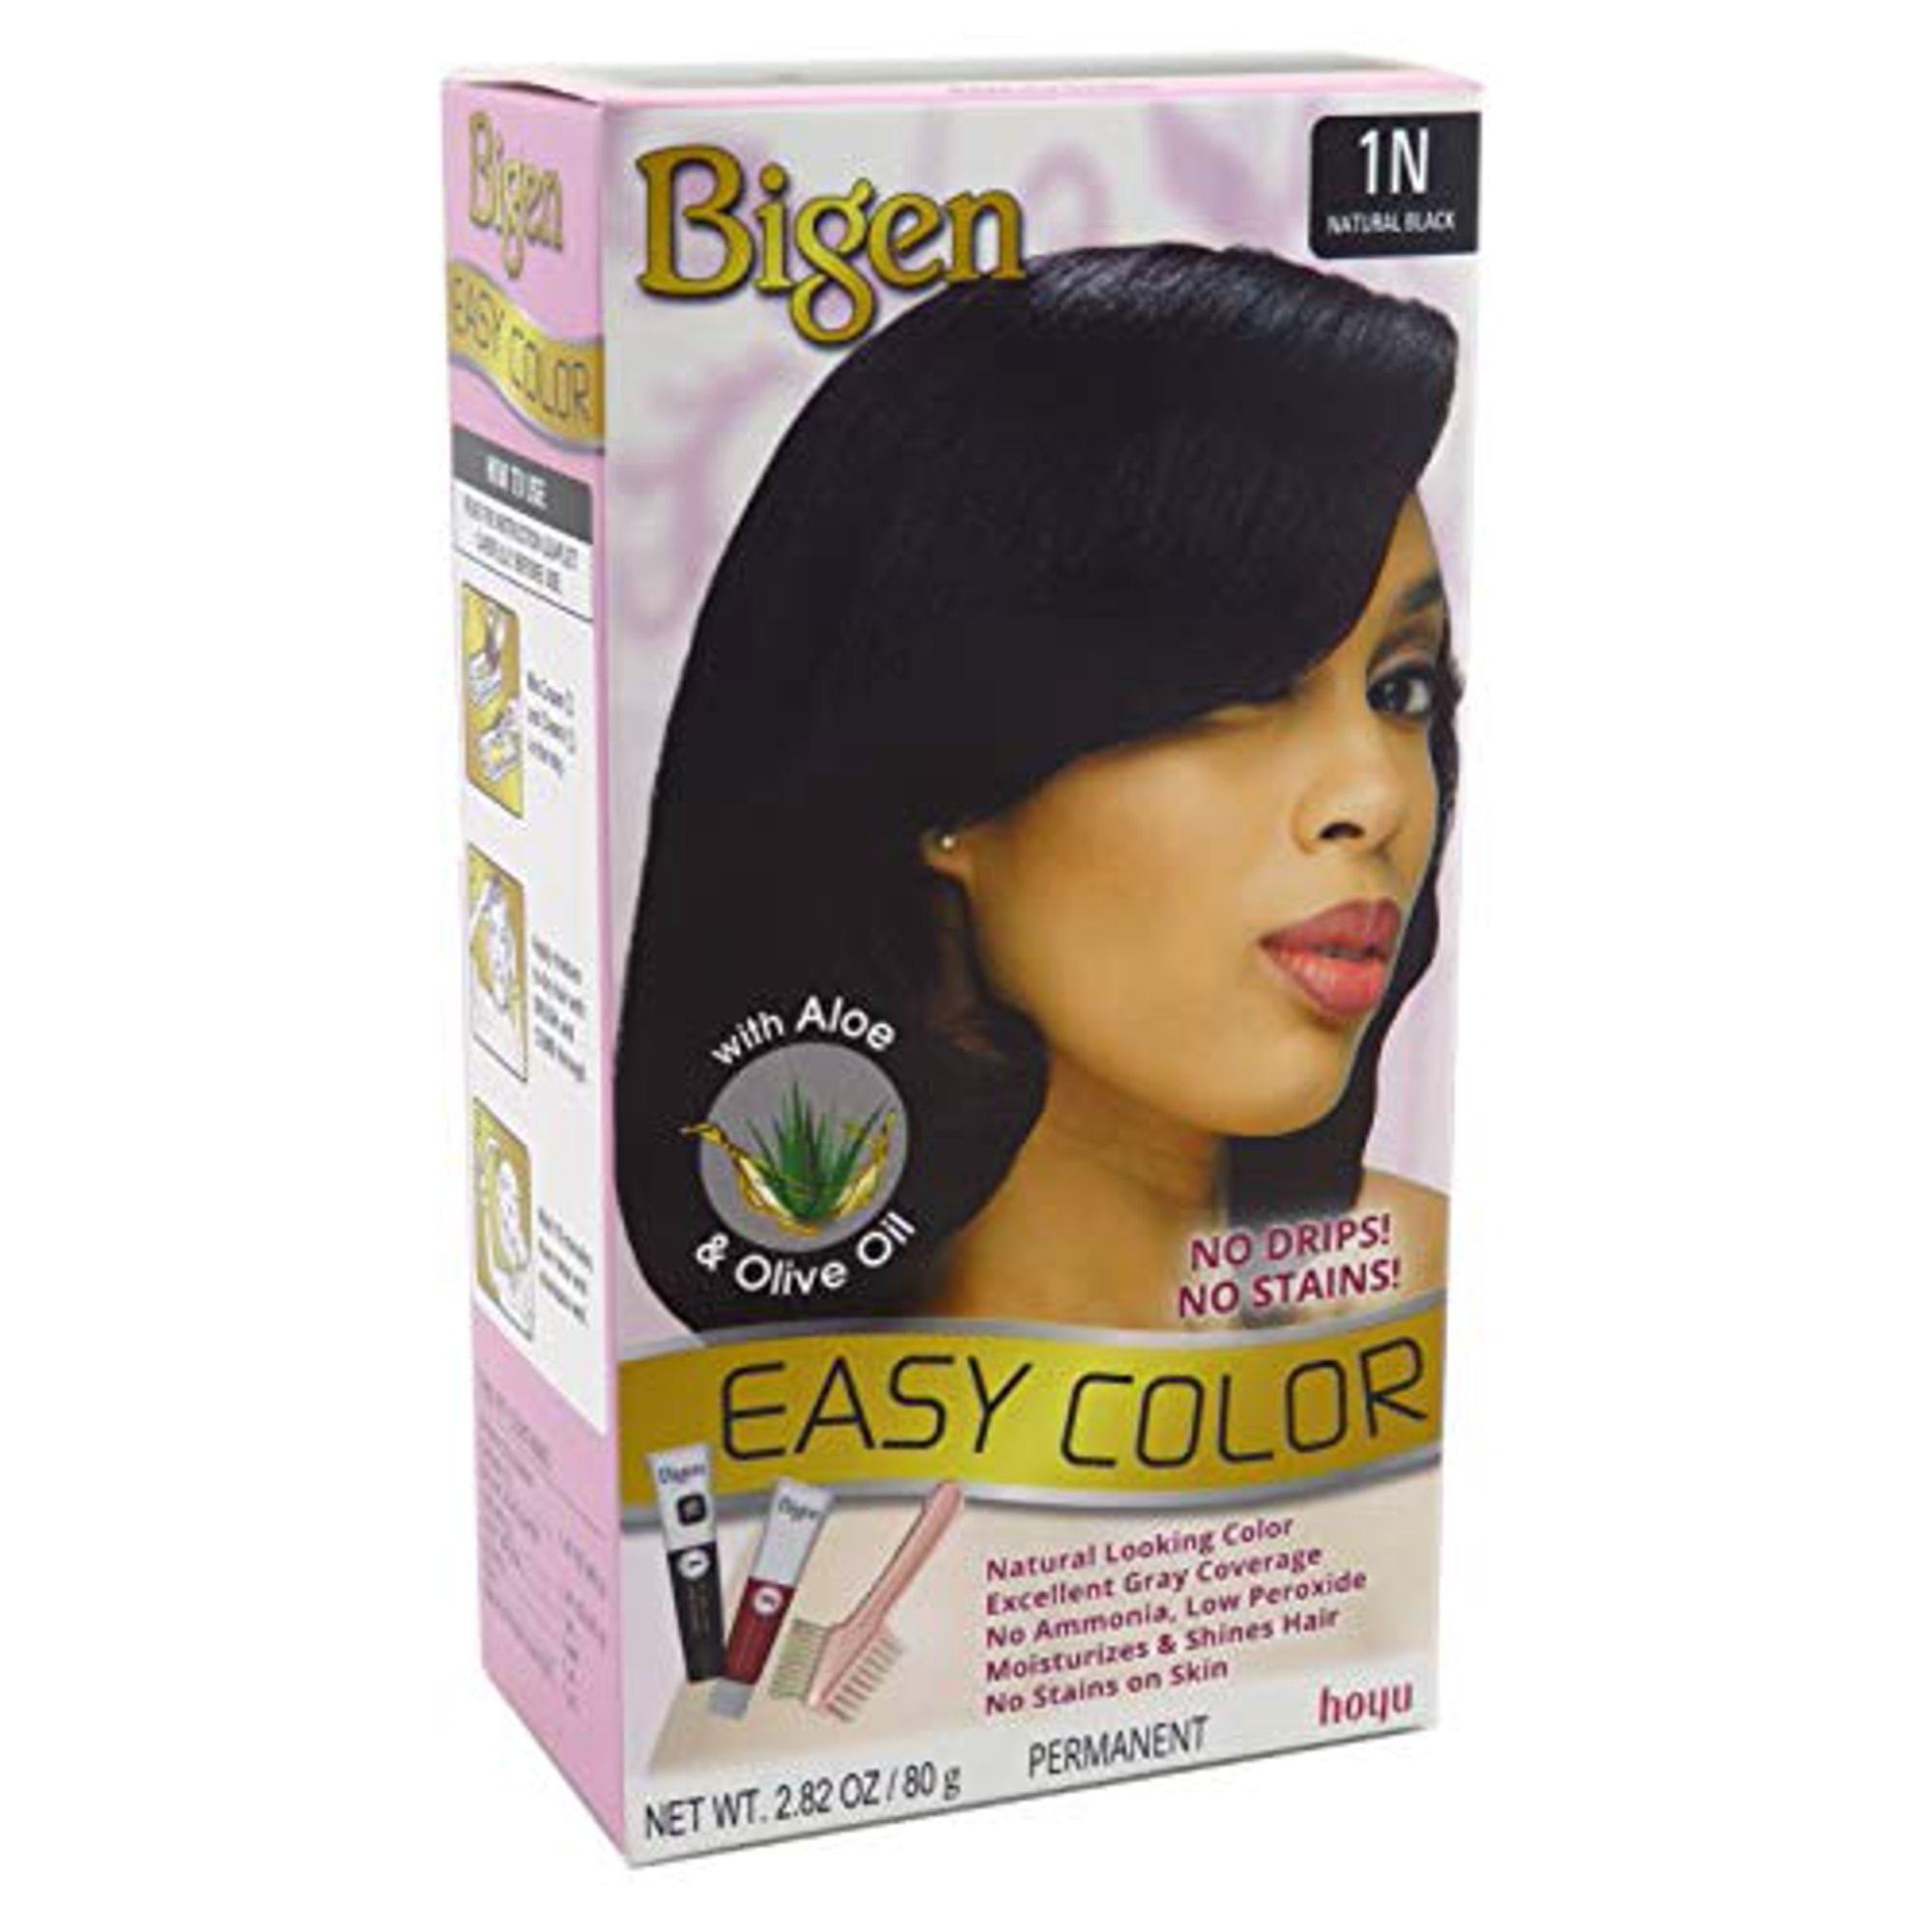 Bigen Permanent Easy Hair Color #1N Natural Black Kit with Aloe & Olive  Oil, 1 Count 